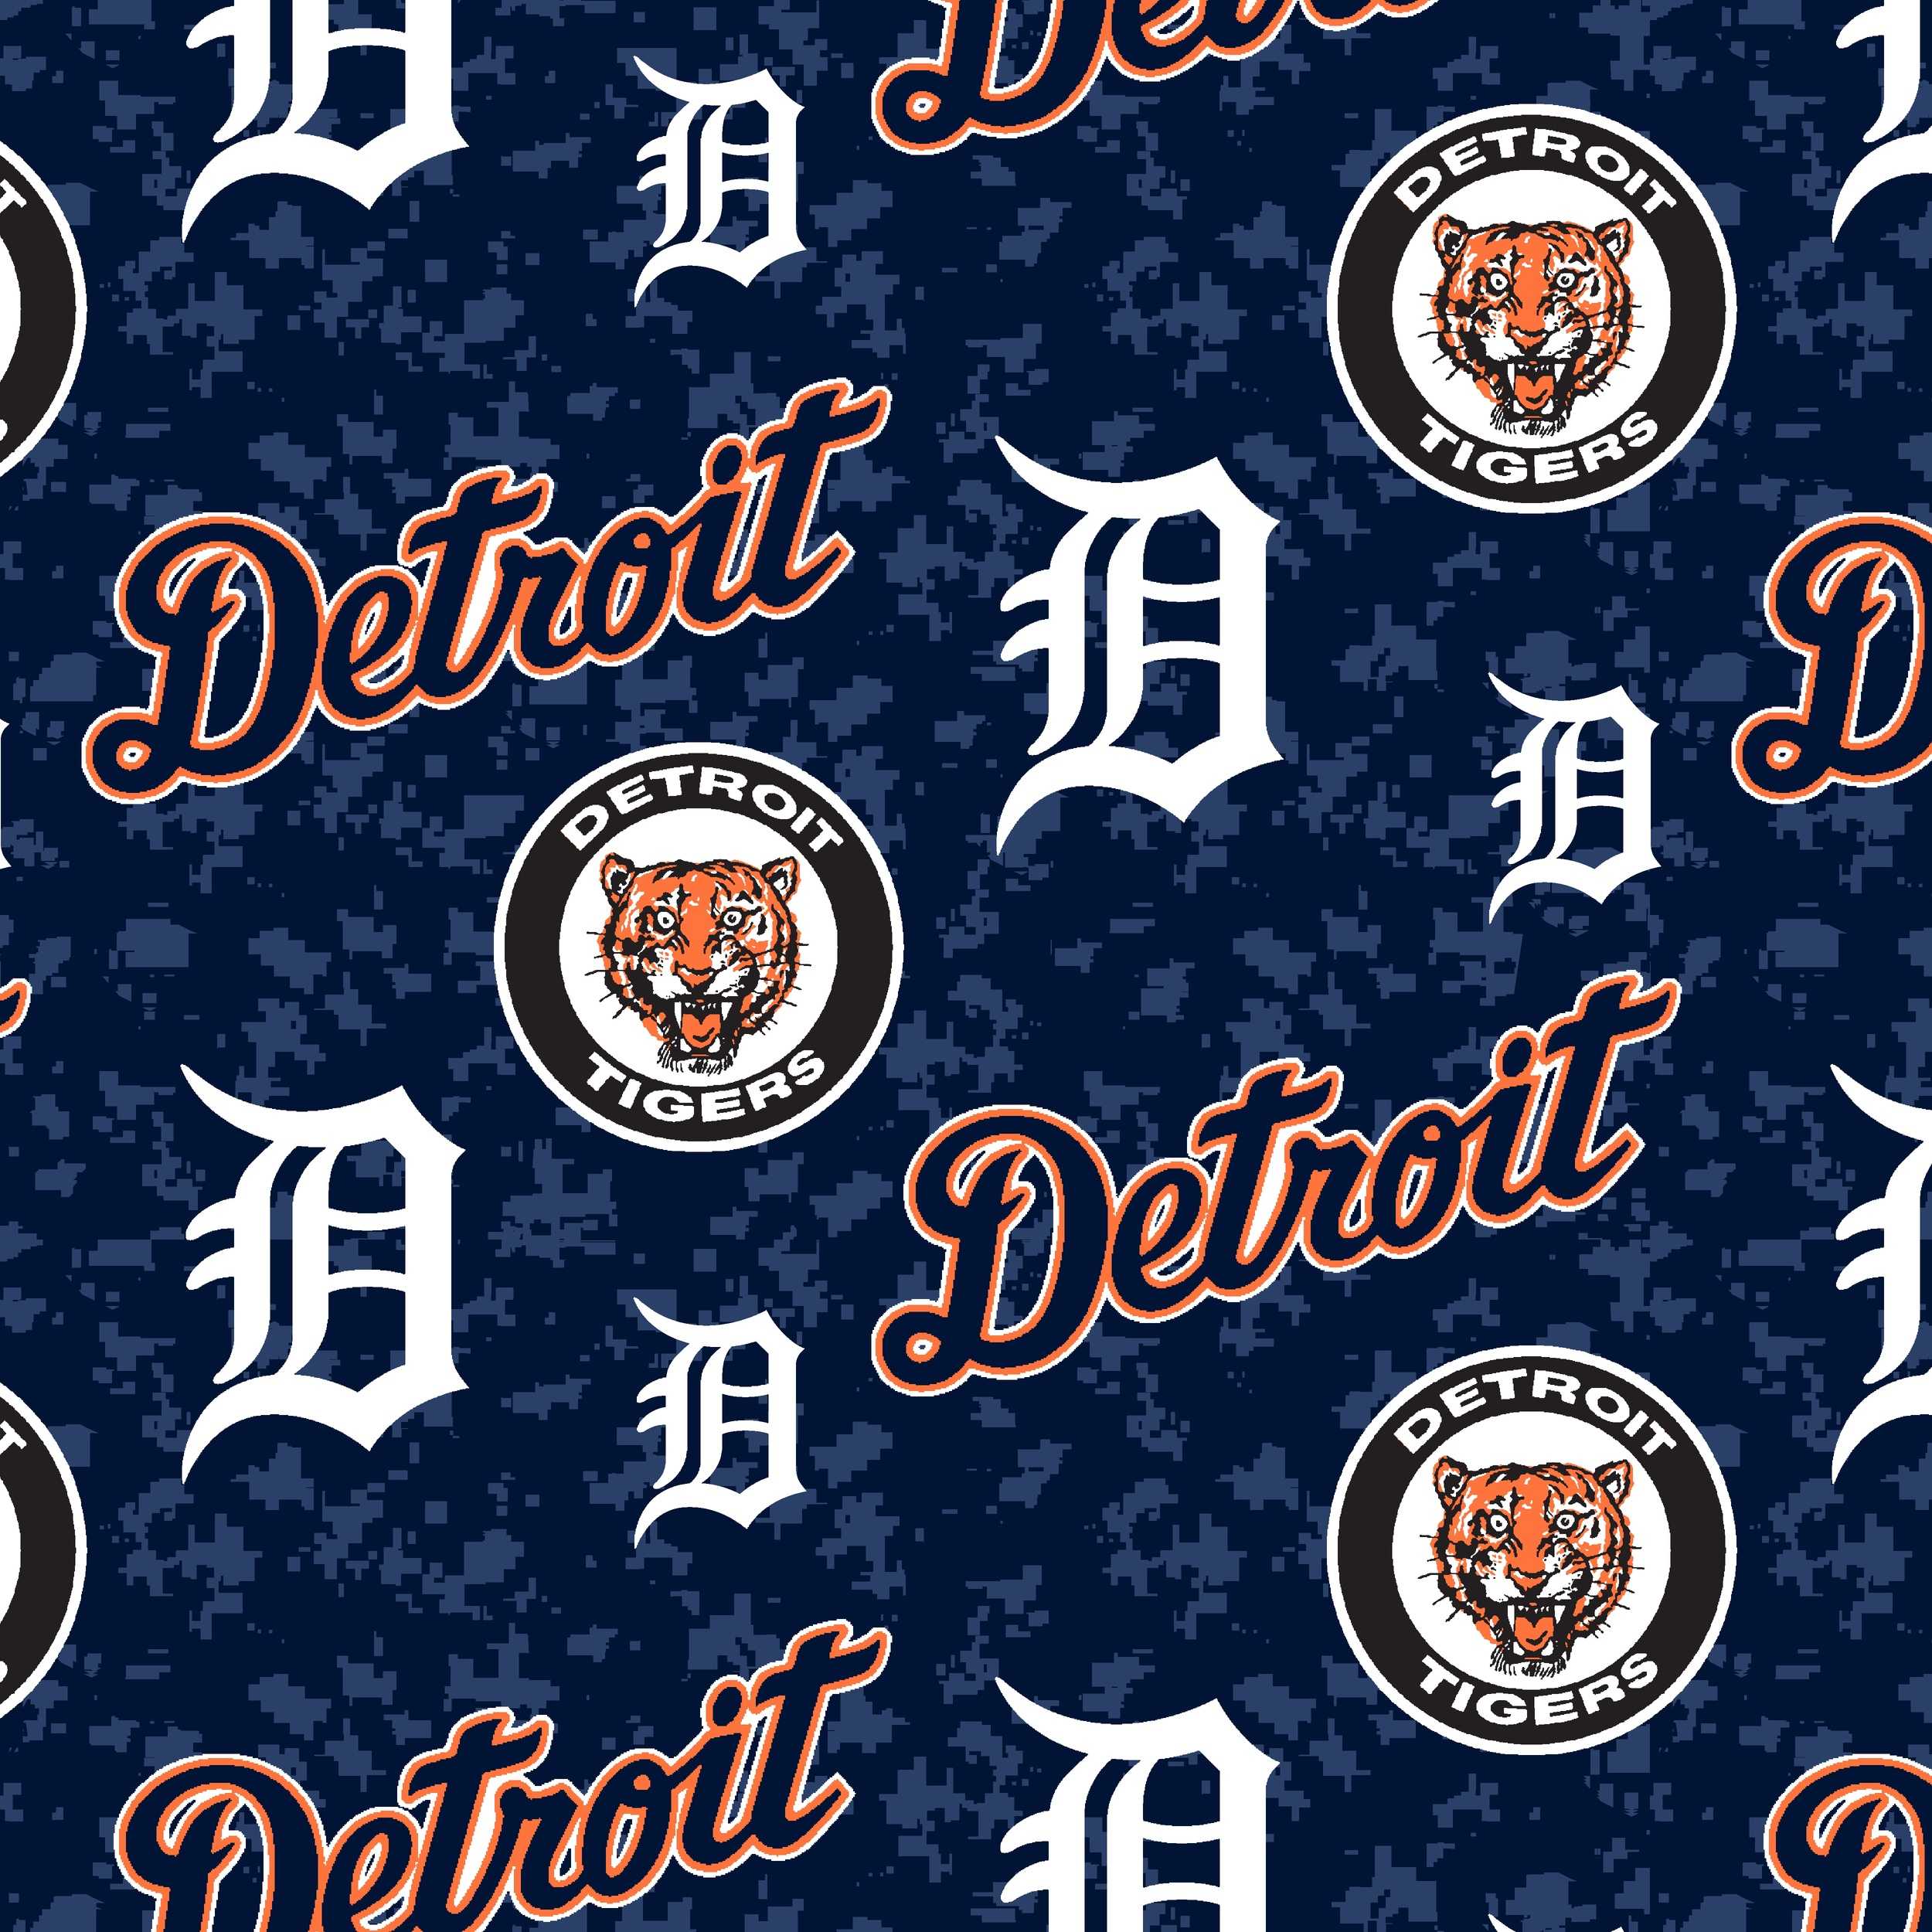 Detroit Tigers Wallpaper Desktop High Quality Of Androids Mlb Fleece